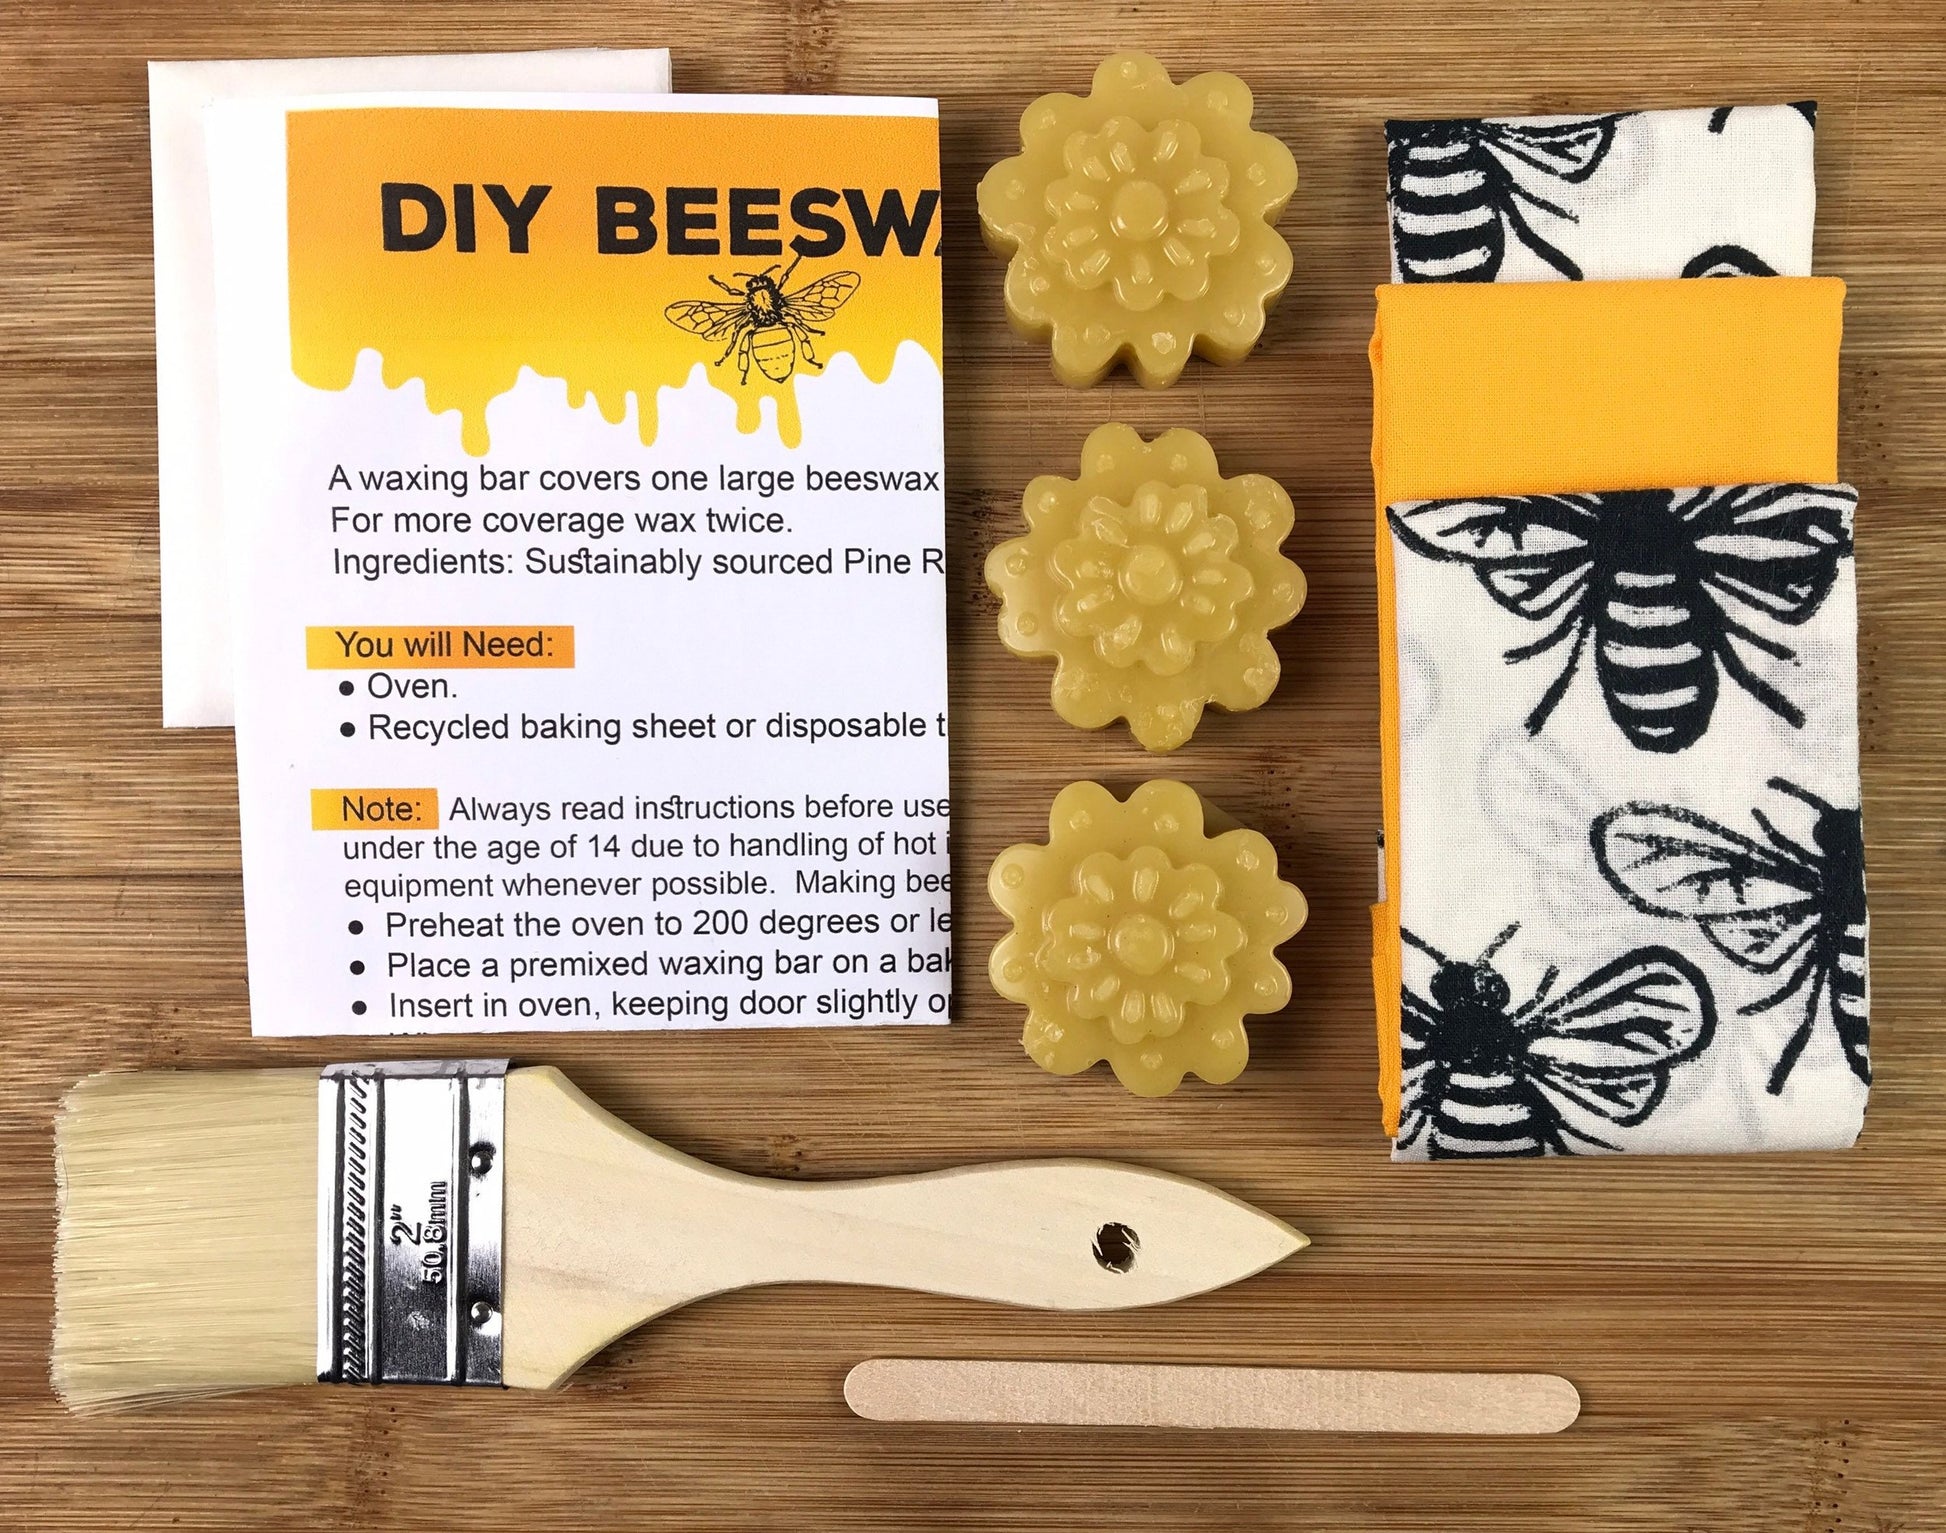 Today I made my own DIY beeswax wraps! : r/ZeroWaste